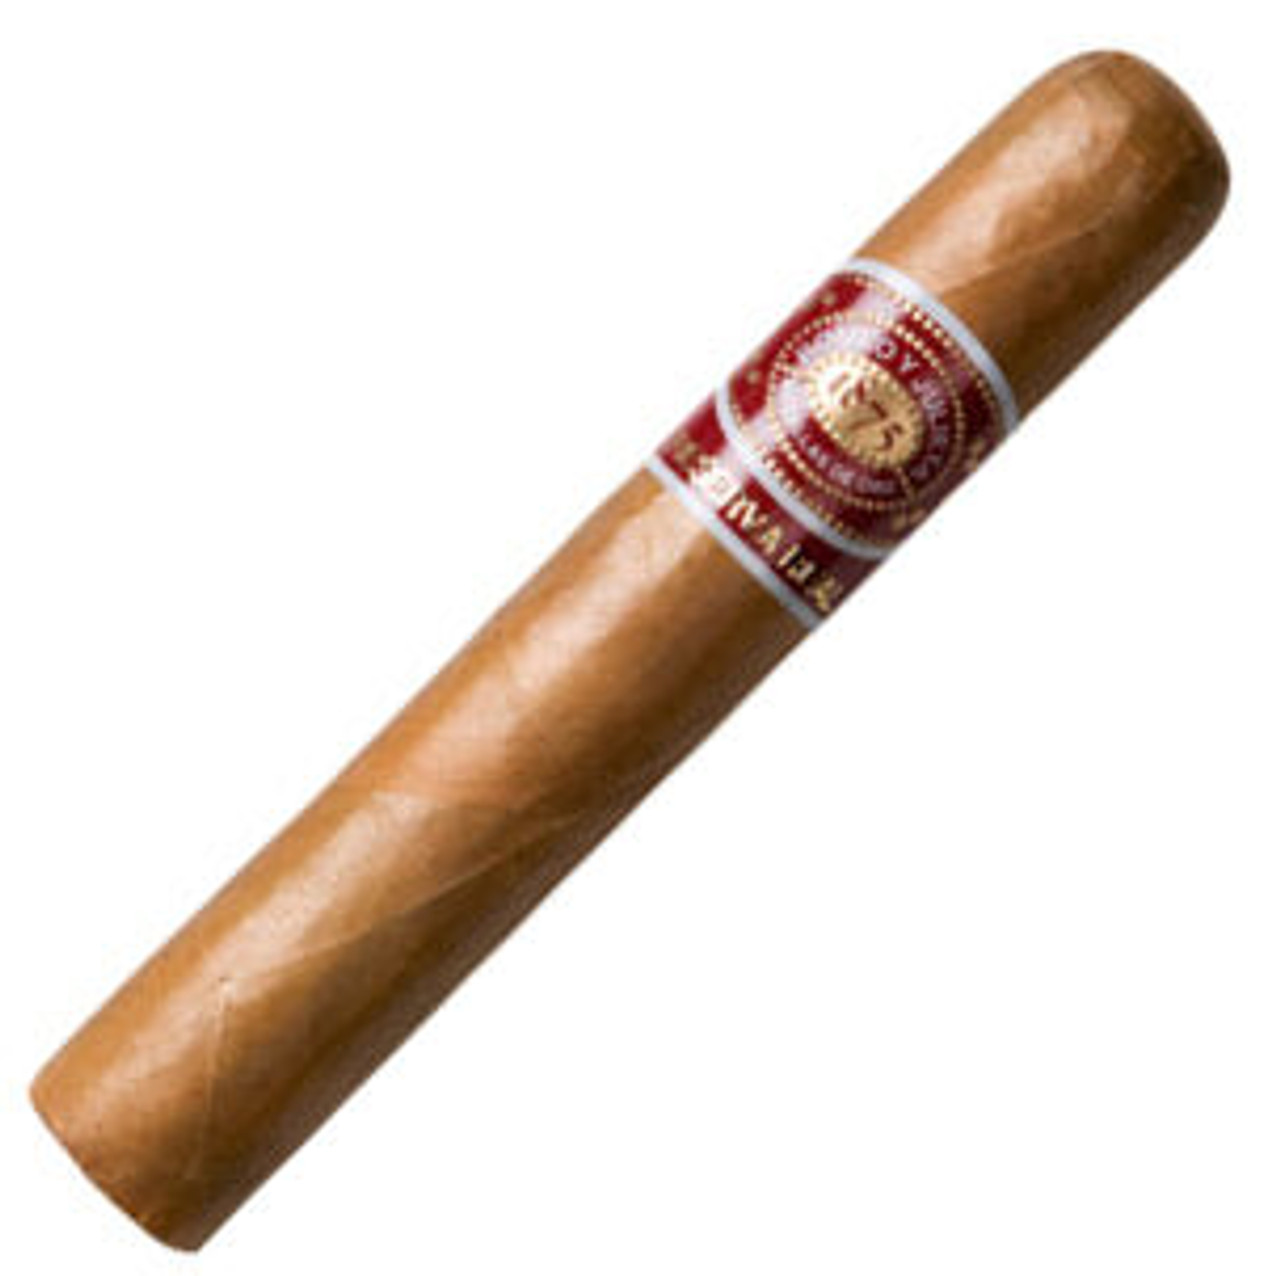 Romeo y Julieta Reserva Real Robusto Cigars - 5 x 52 (Pack of 5)